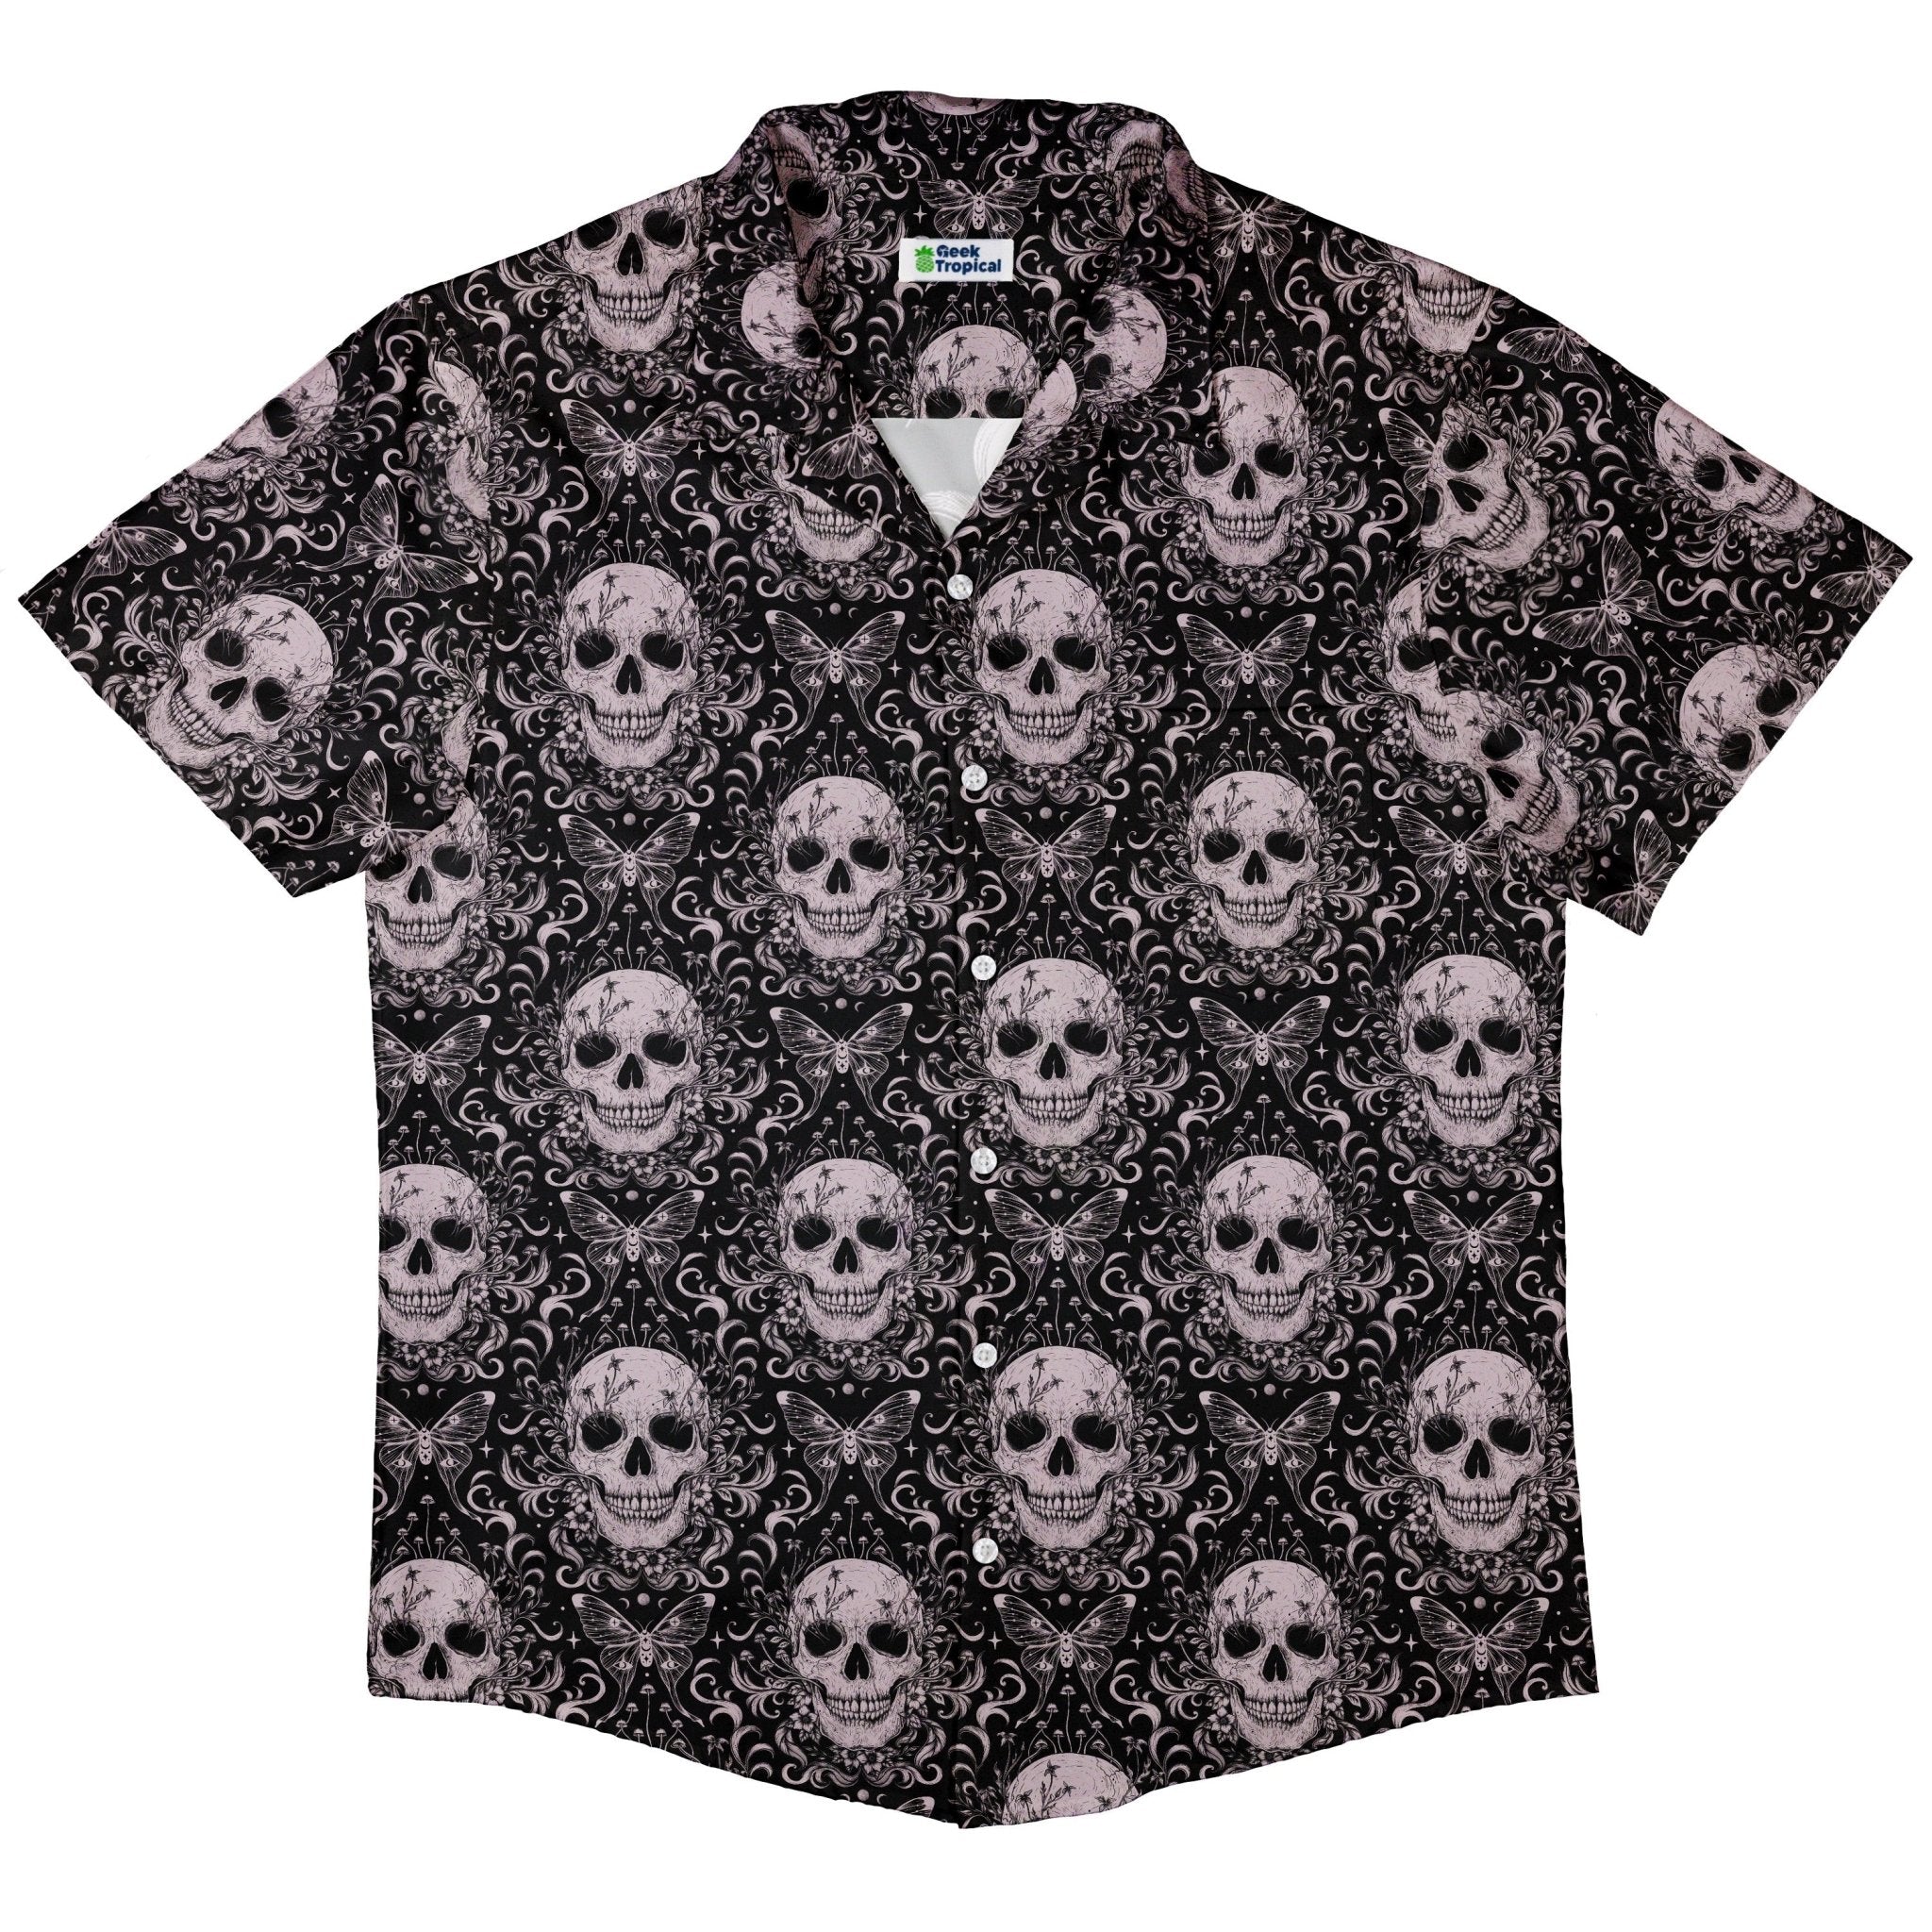 Episodic Skull Black White Button Up Shirt - XS - Hawaiian Shirt - No Pocket -